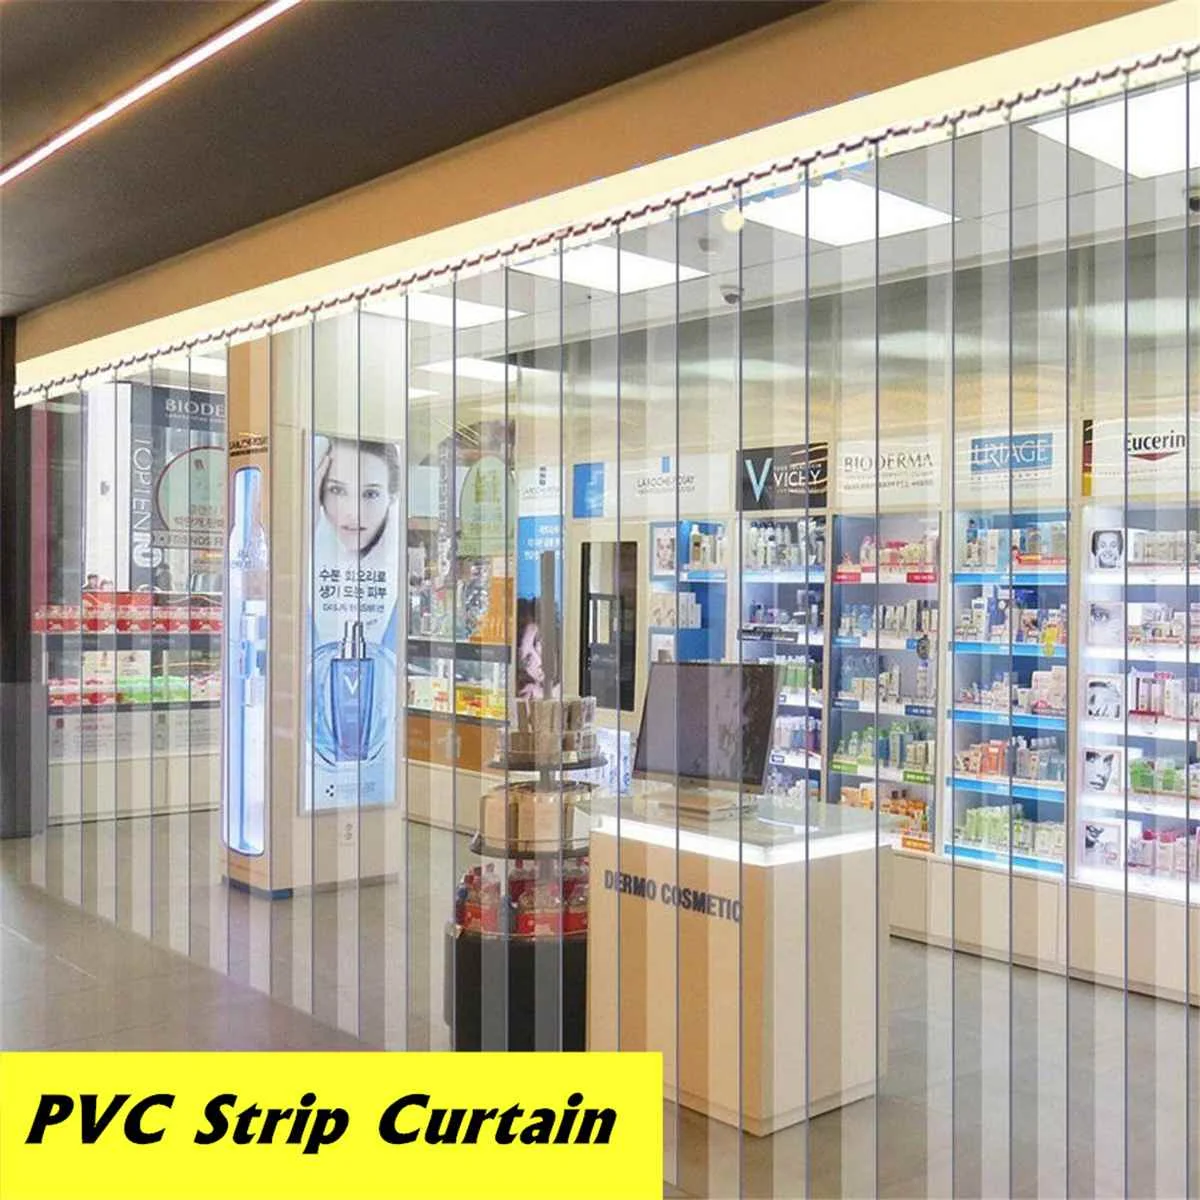 PVC Strip Curtain Door 1.5 Meter x 2Meter Coldroom Warehouse Catering 300 